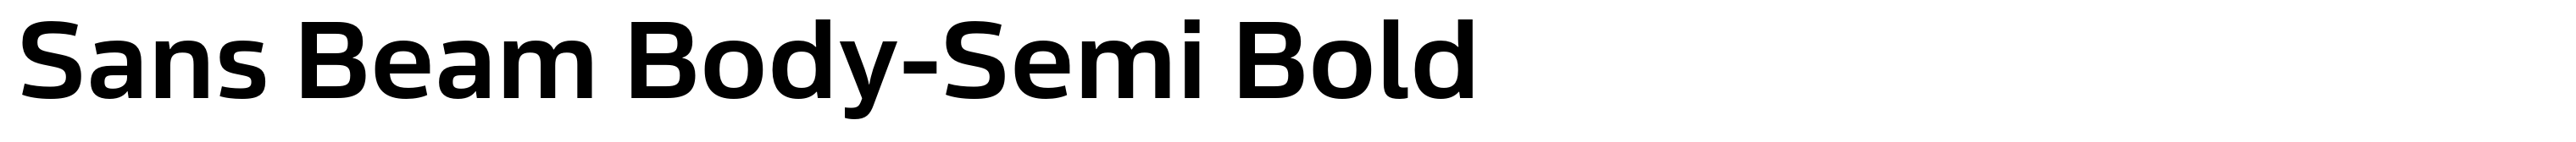 Sans Beam Body-Semi Bold